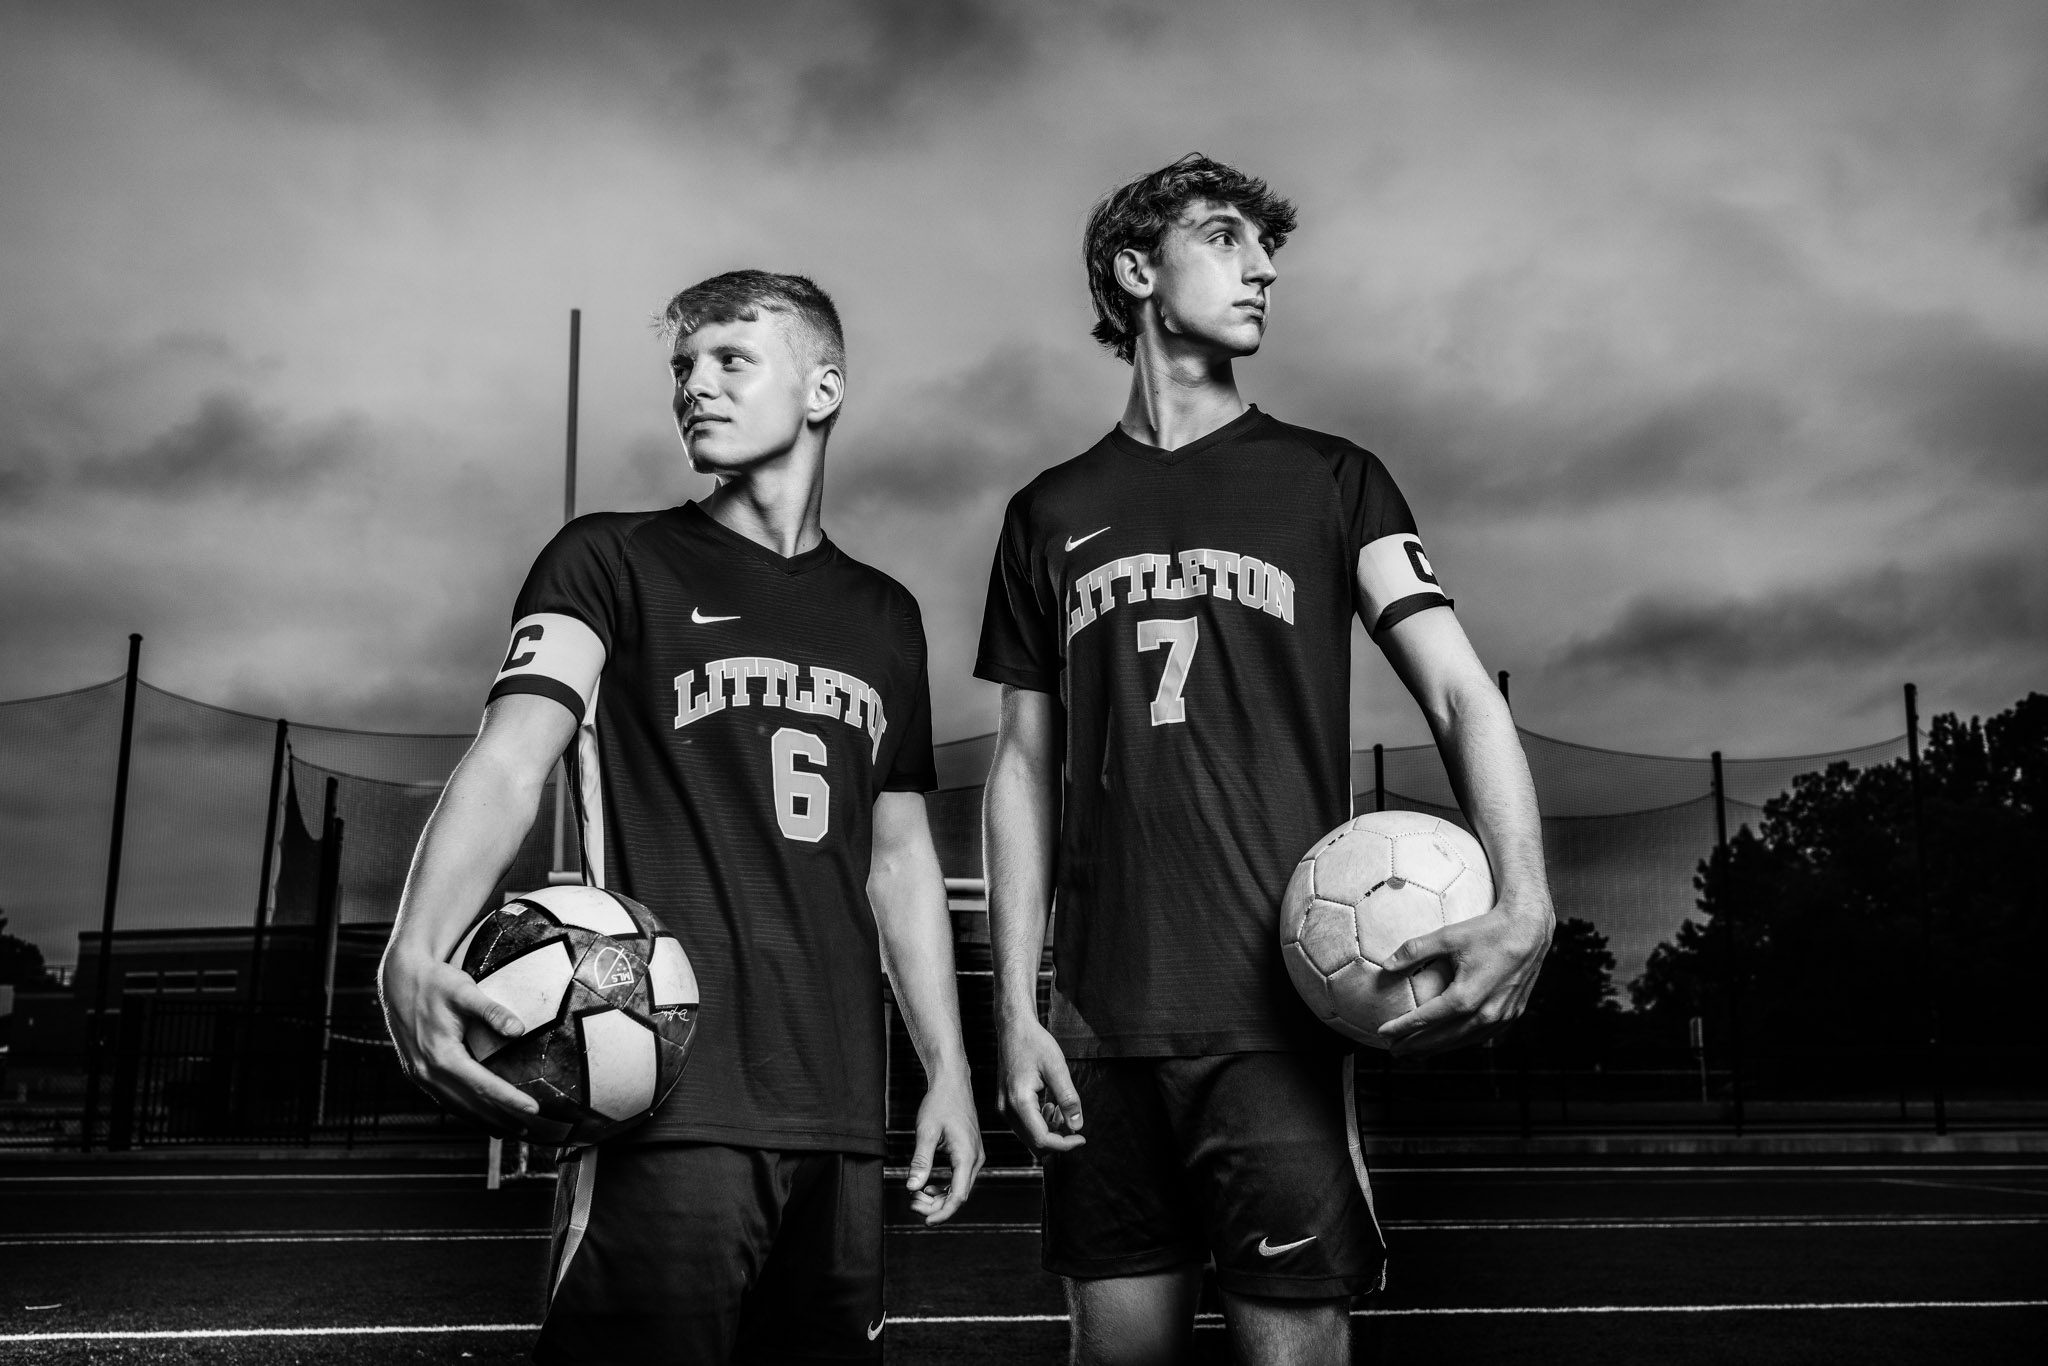 Black and white senior portrait of two young men in soccer uniforms holding soccer balls on a field in Littleton Massachusetts